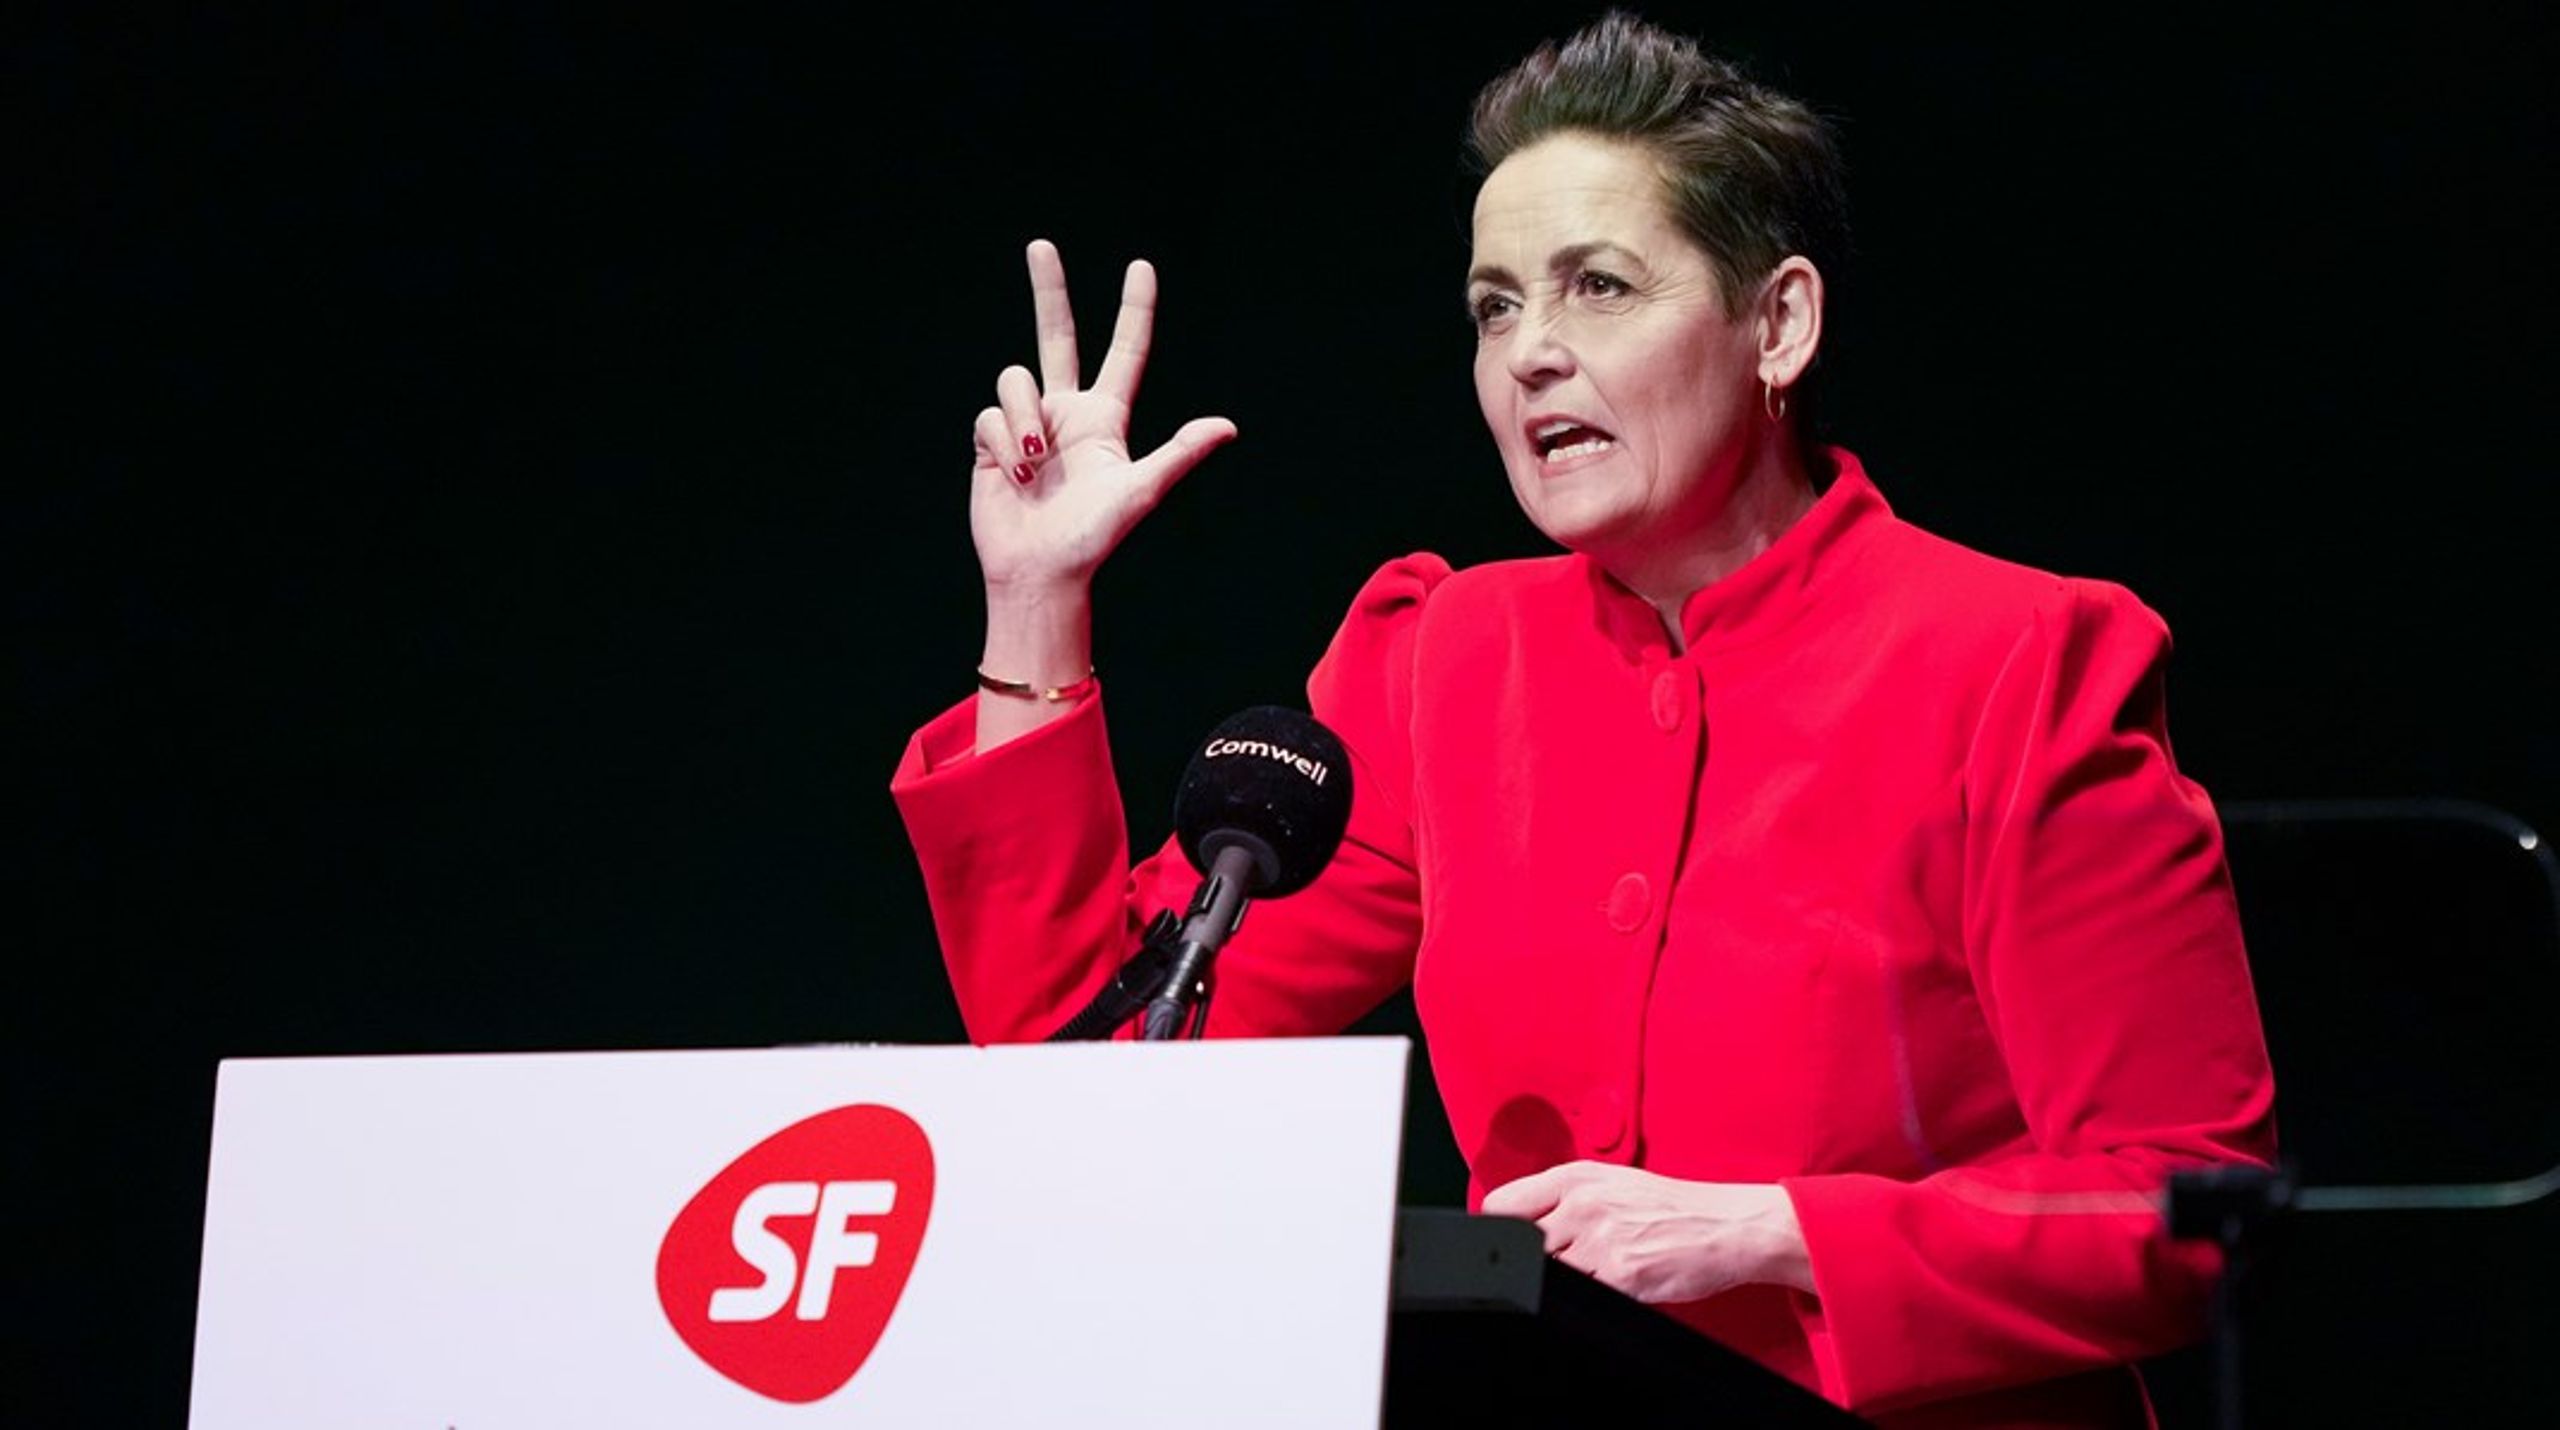 SF's formand Pia Olsen Dyhr står med tre strategiske udfordringer.